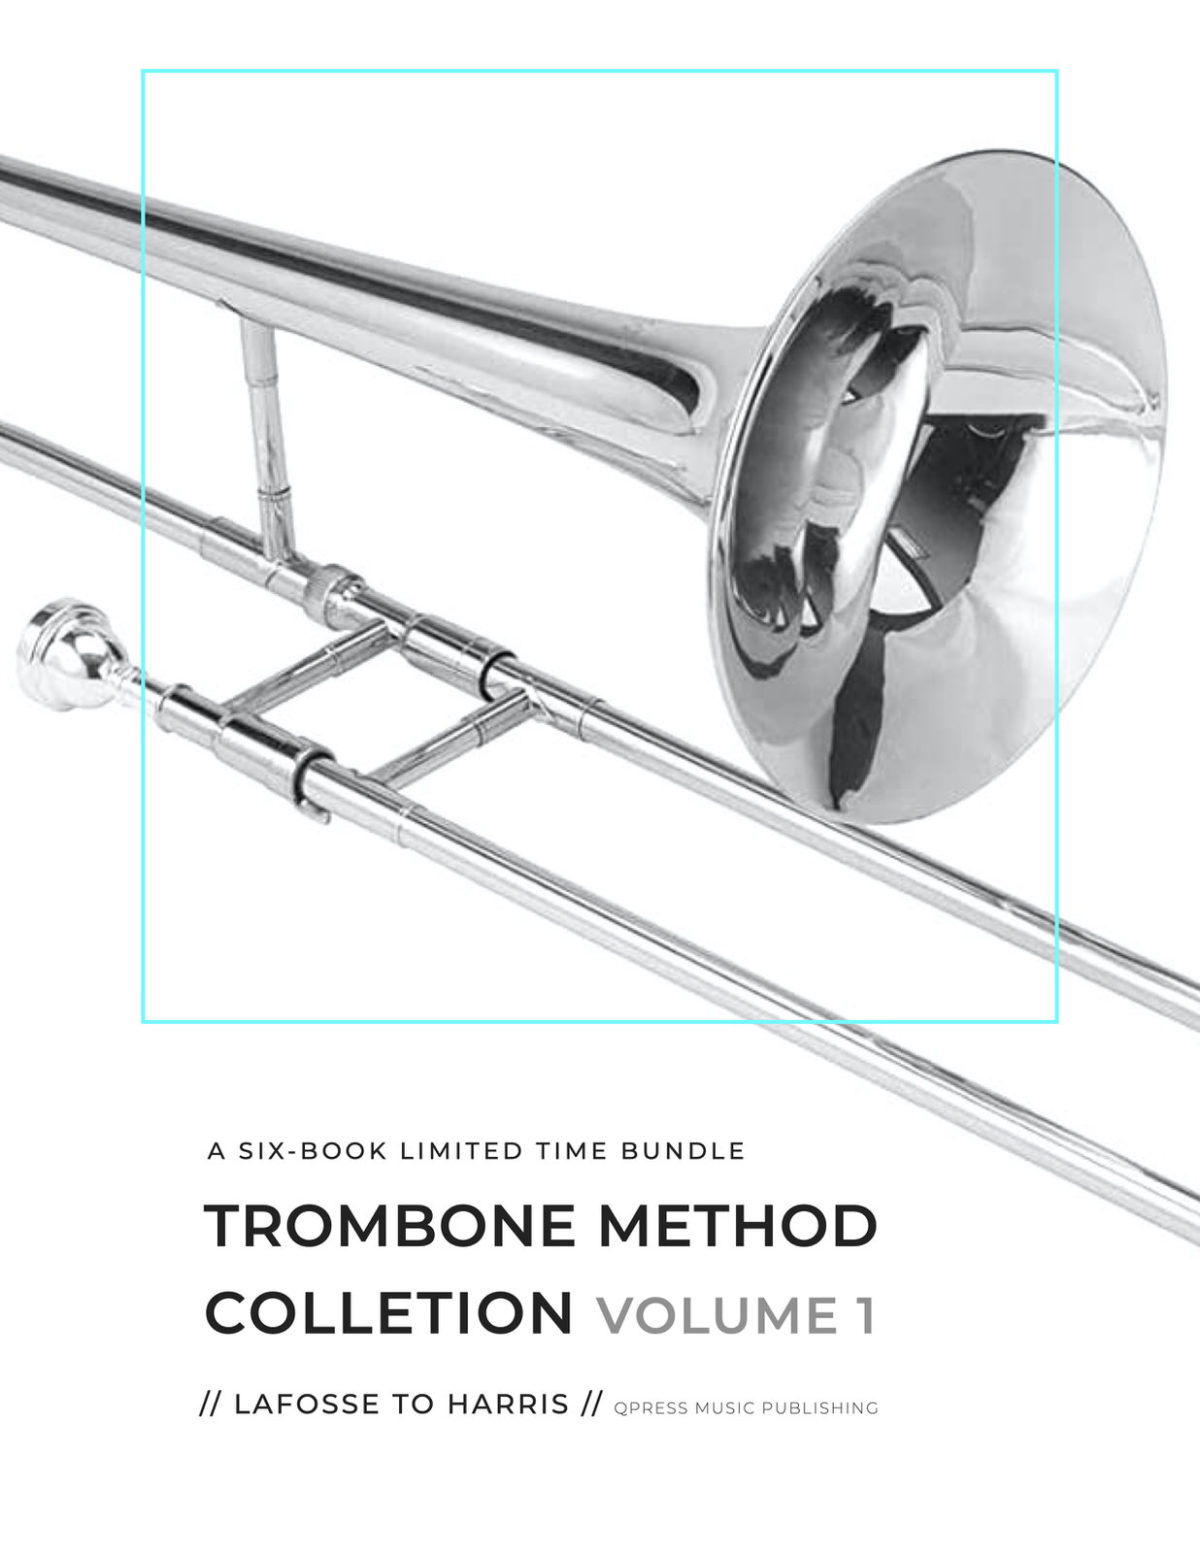 Trombone Method Collection Volume 1